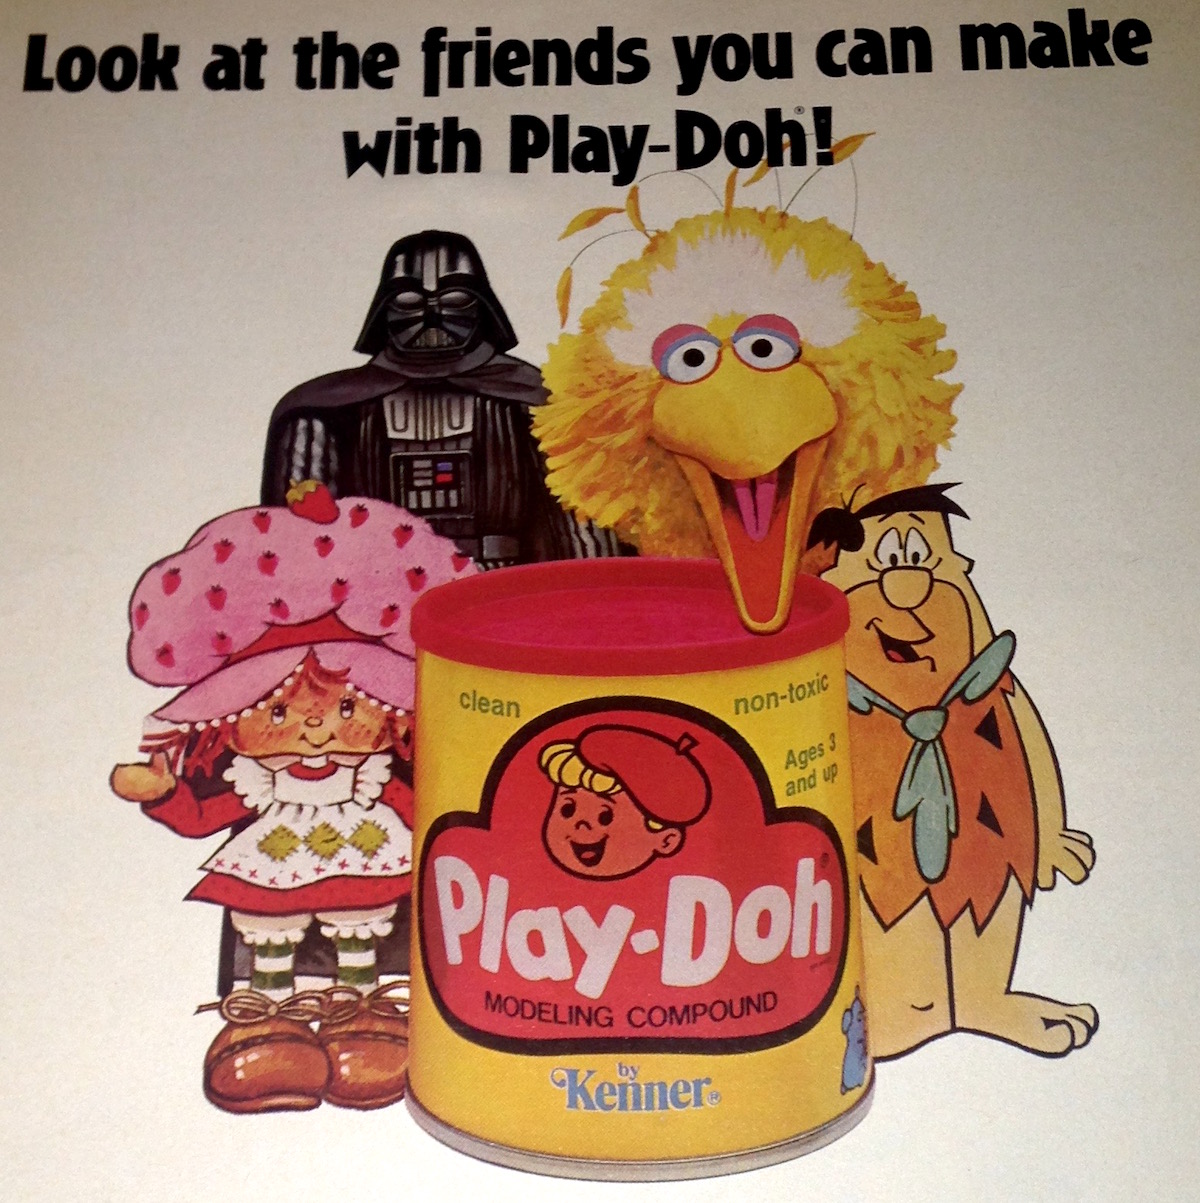 Play-Doh got its start as a wallpaper cleaner, created in Cincinnati